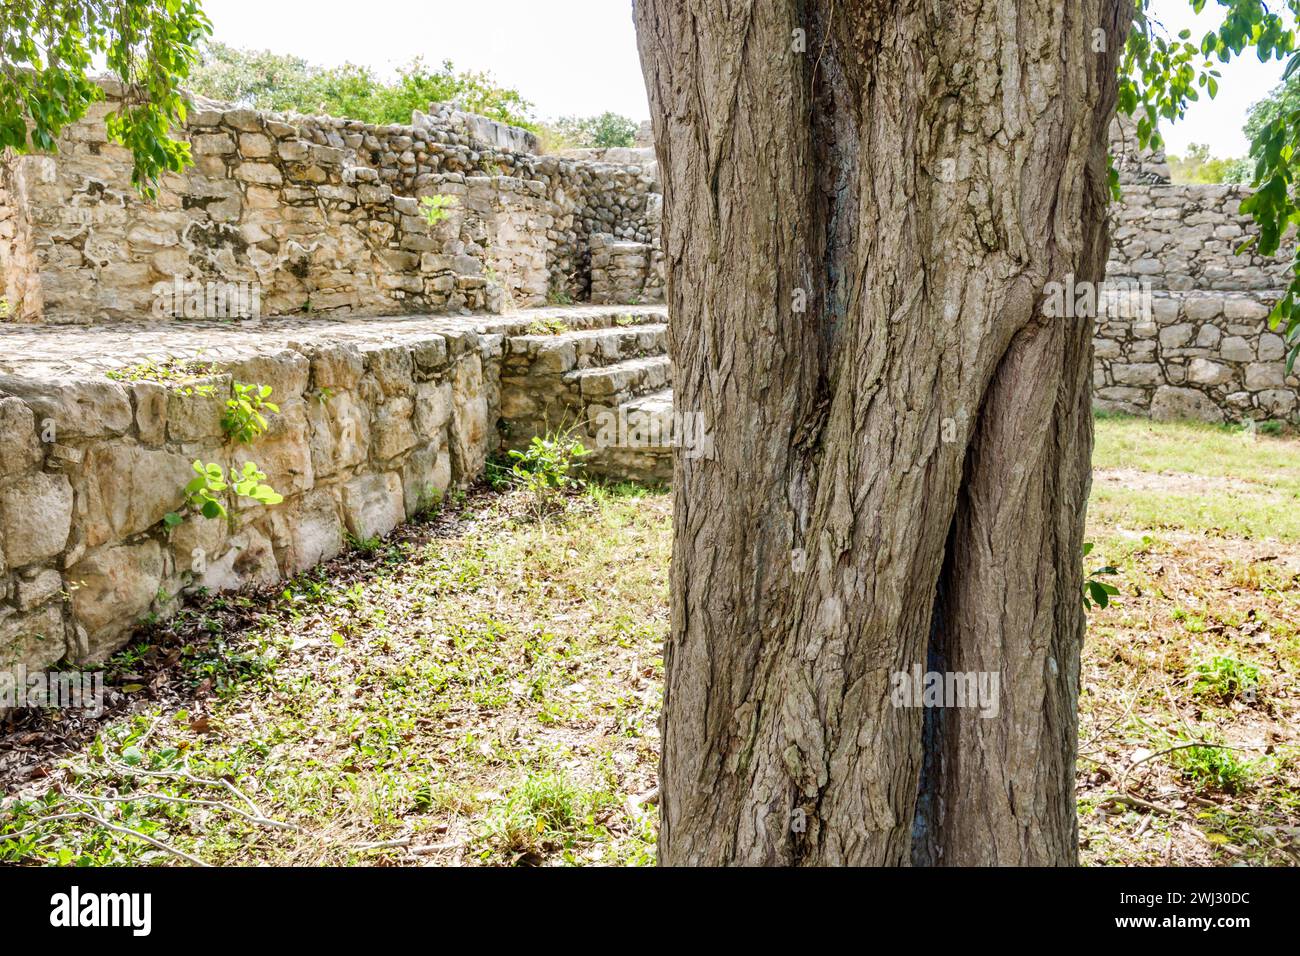 Merida Mexico,Dzibilchaltun Archaeological Zone site National Park,Mayan civilization city ruins,Zona Arqueologica de Dzibilchaltun,rock stone limesto Stock Photo